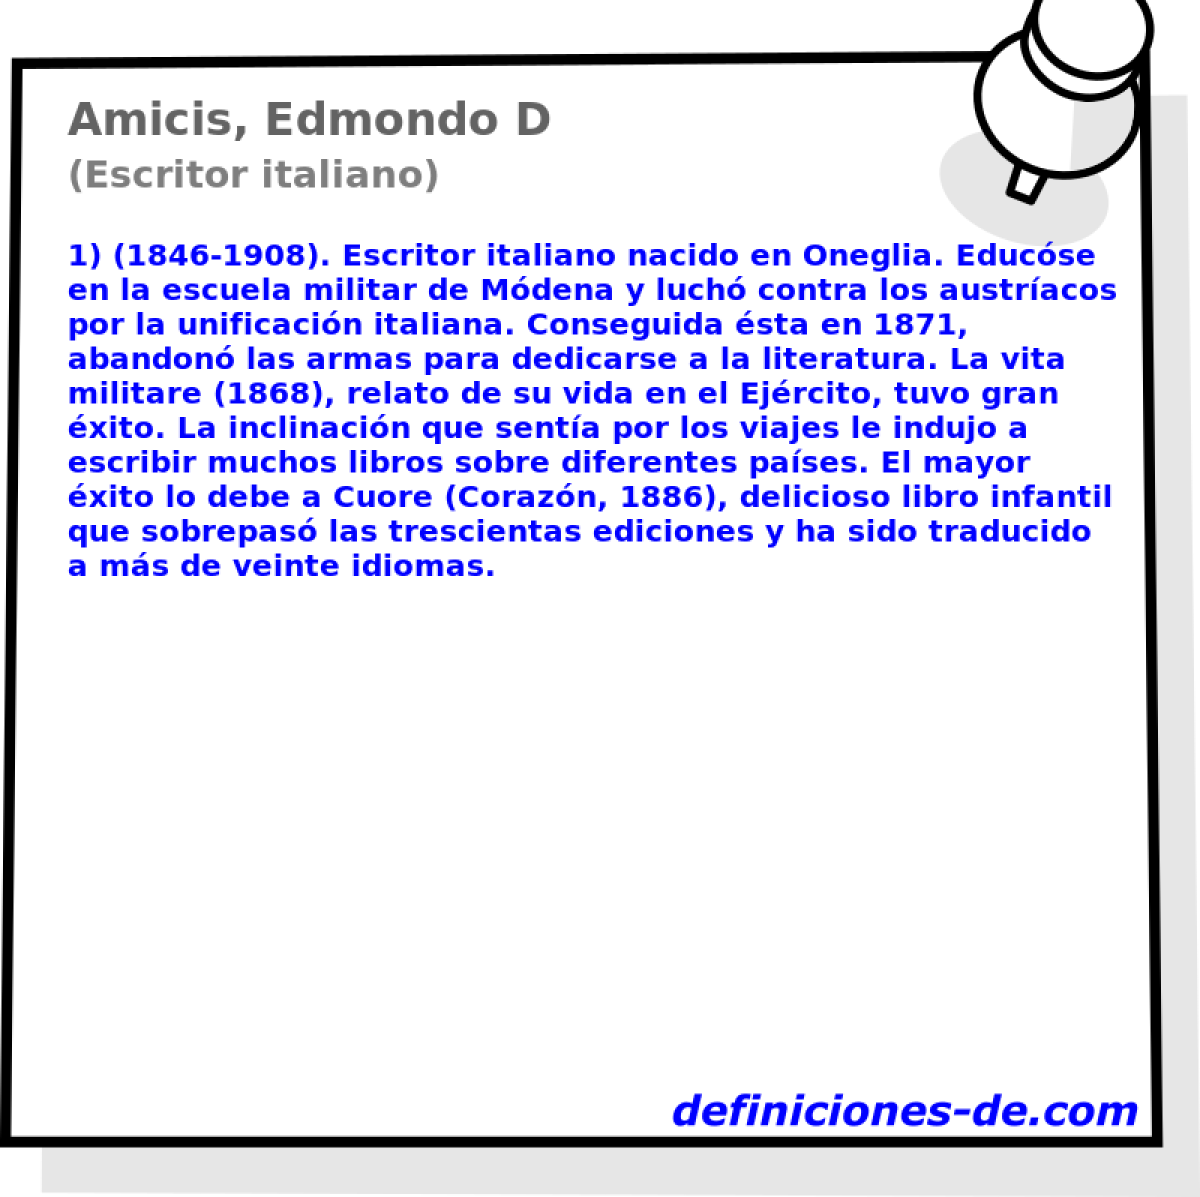 Amicis, Edmondo D (Escritor italiano)